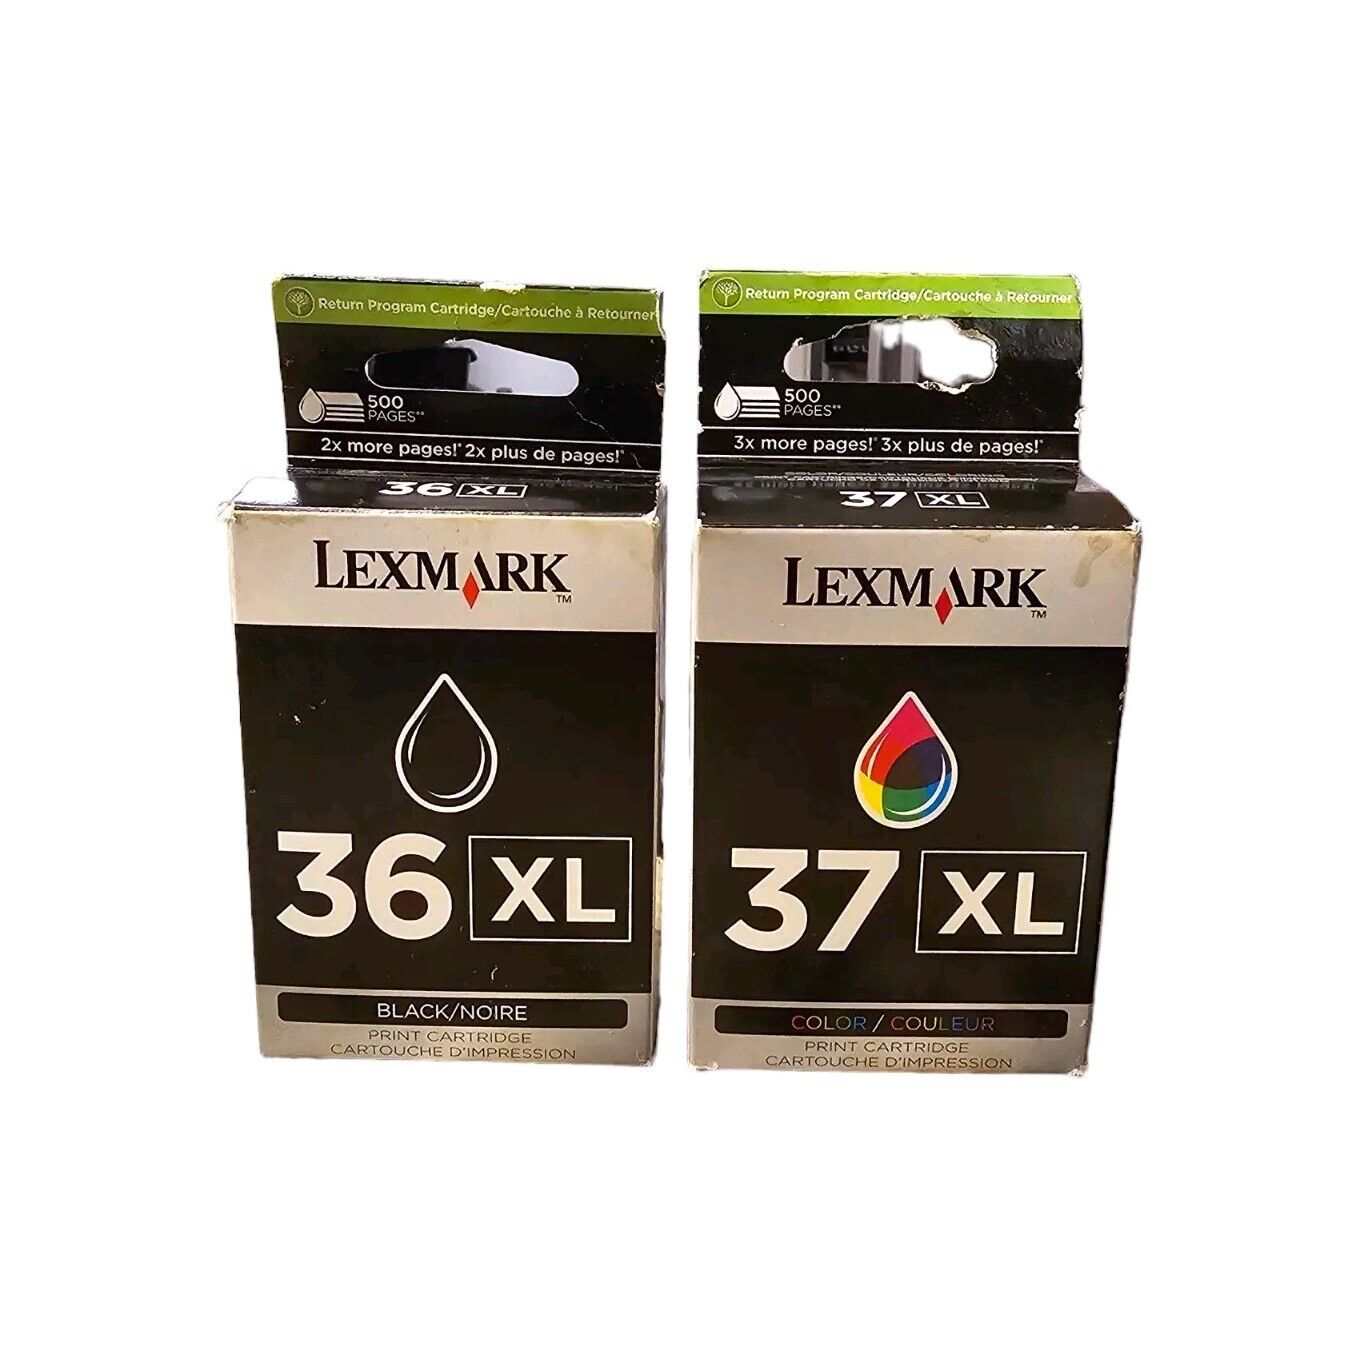 Lexmark Genuine OEM 36XL Black 37XL Color Ink Cartridges NEW SEALED 